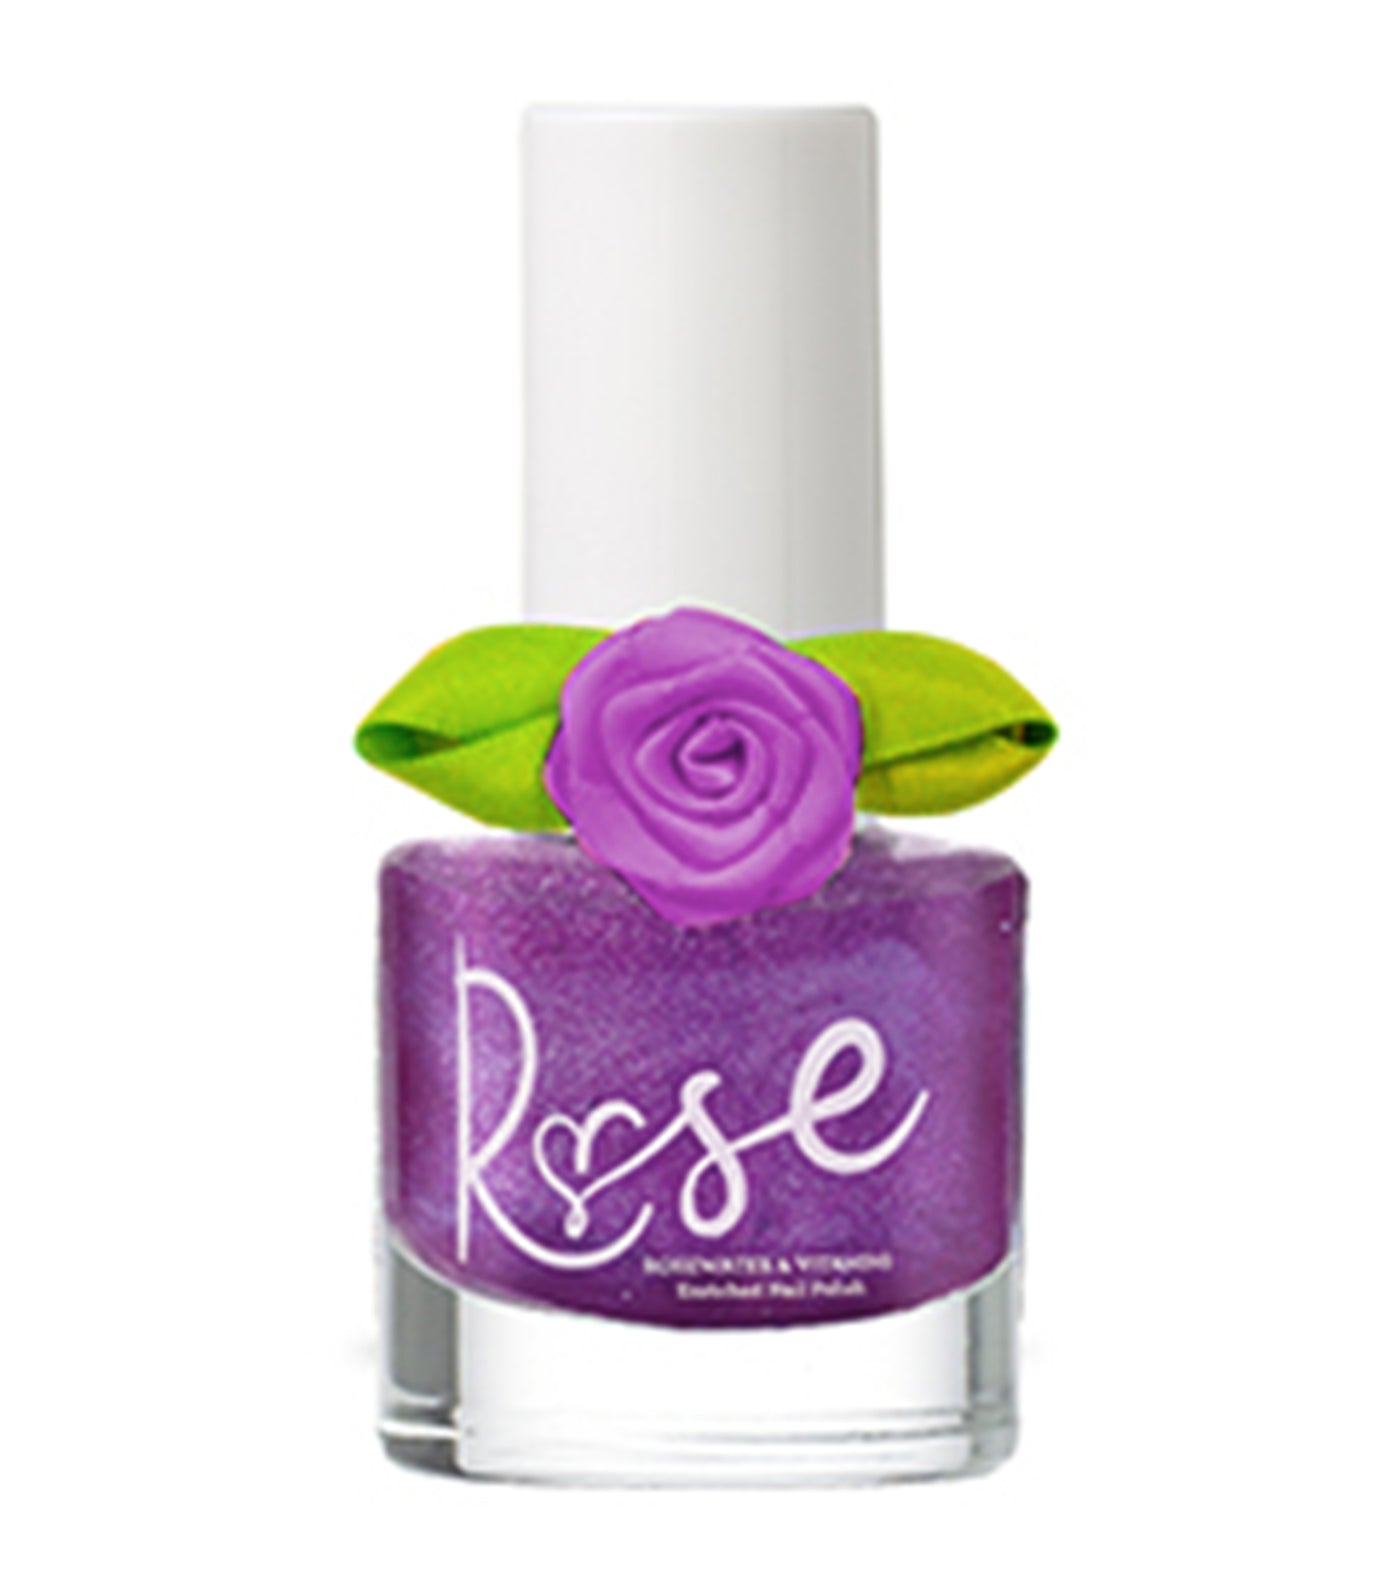 rose violet peel-off nail polish - goat